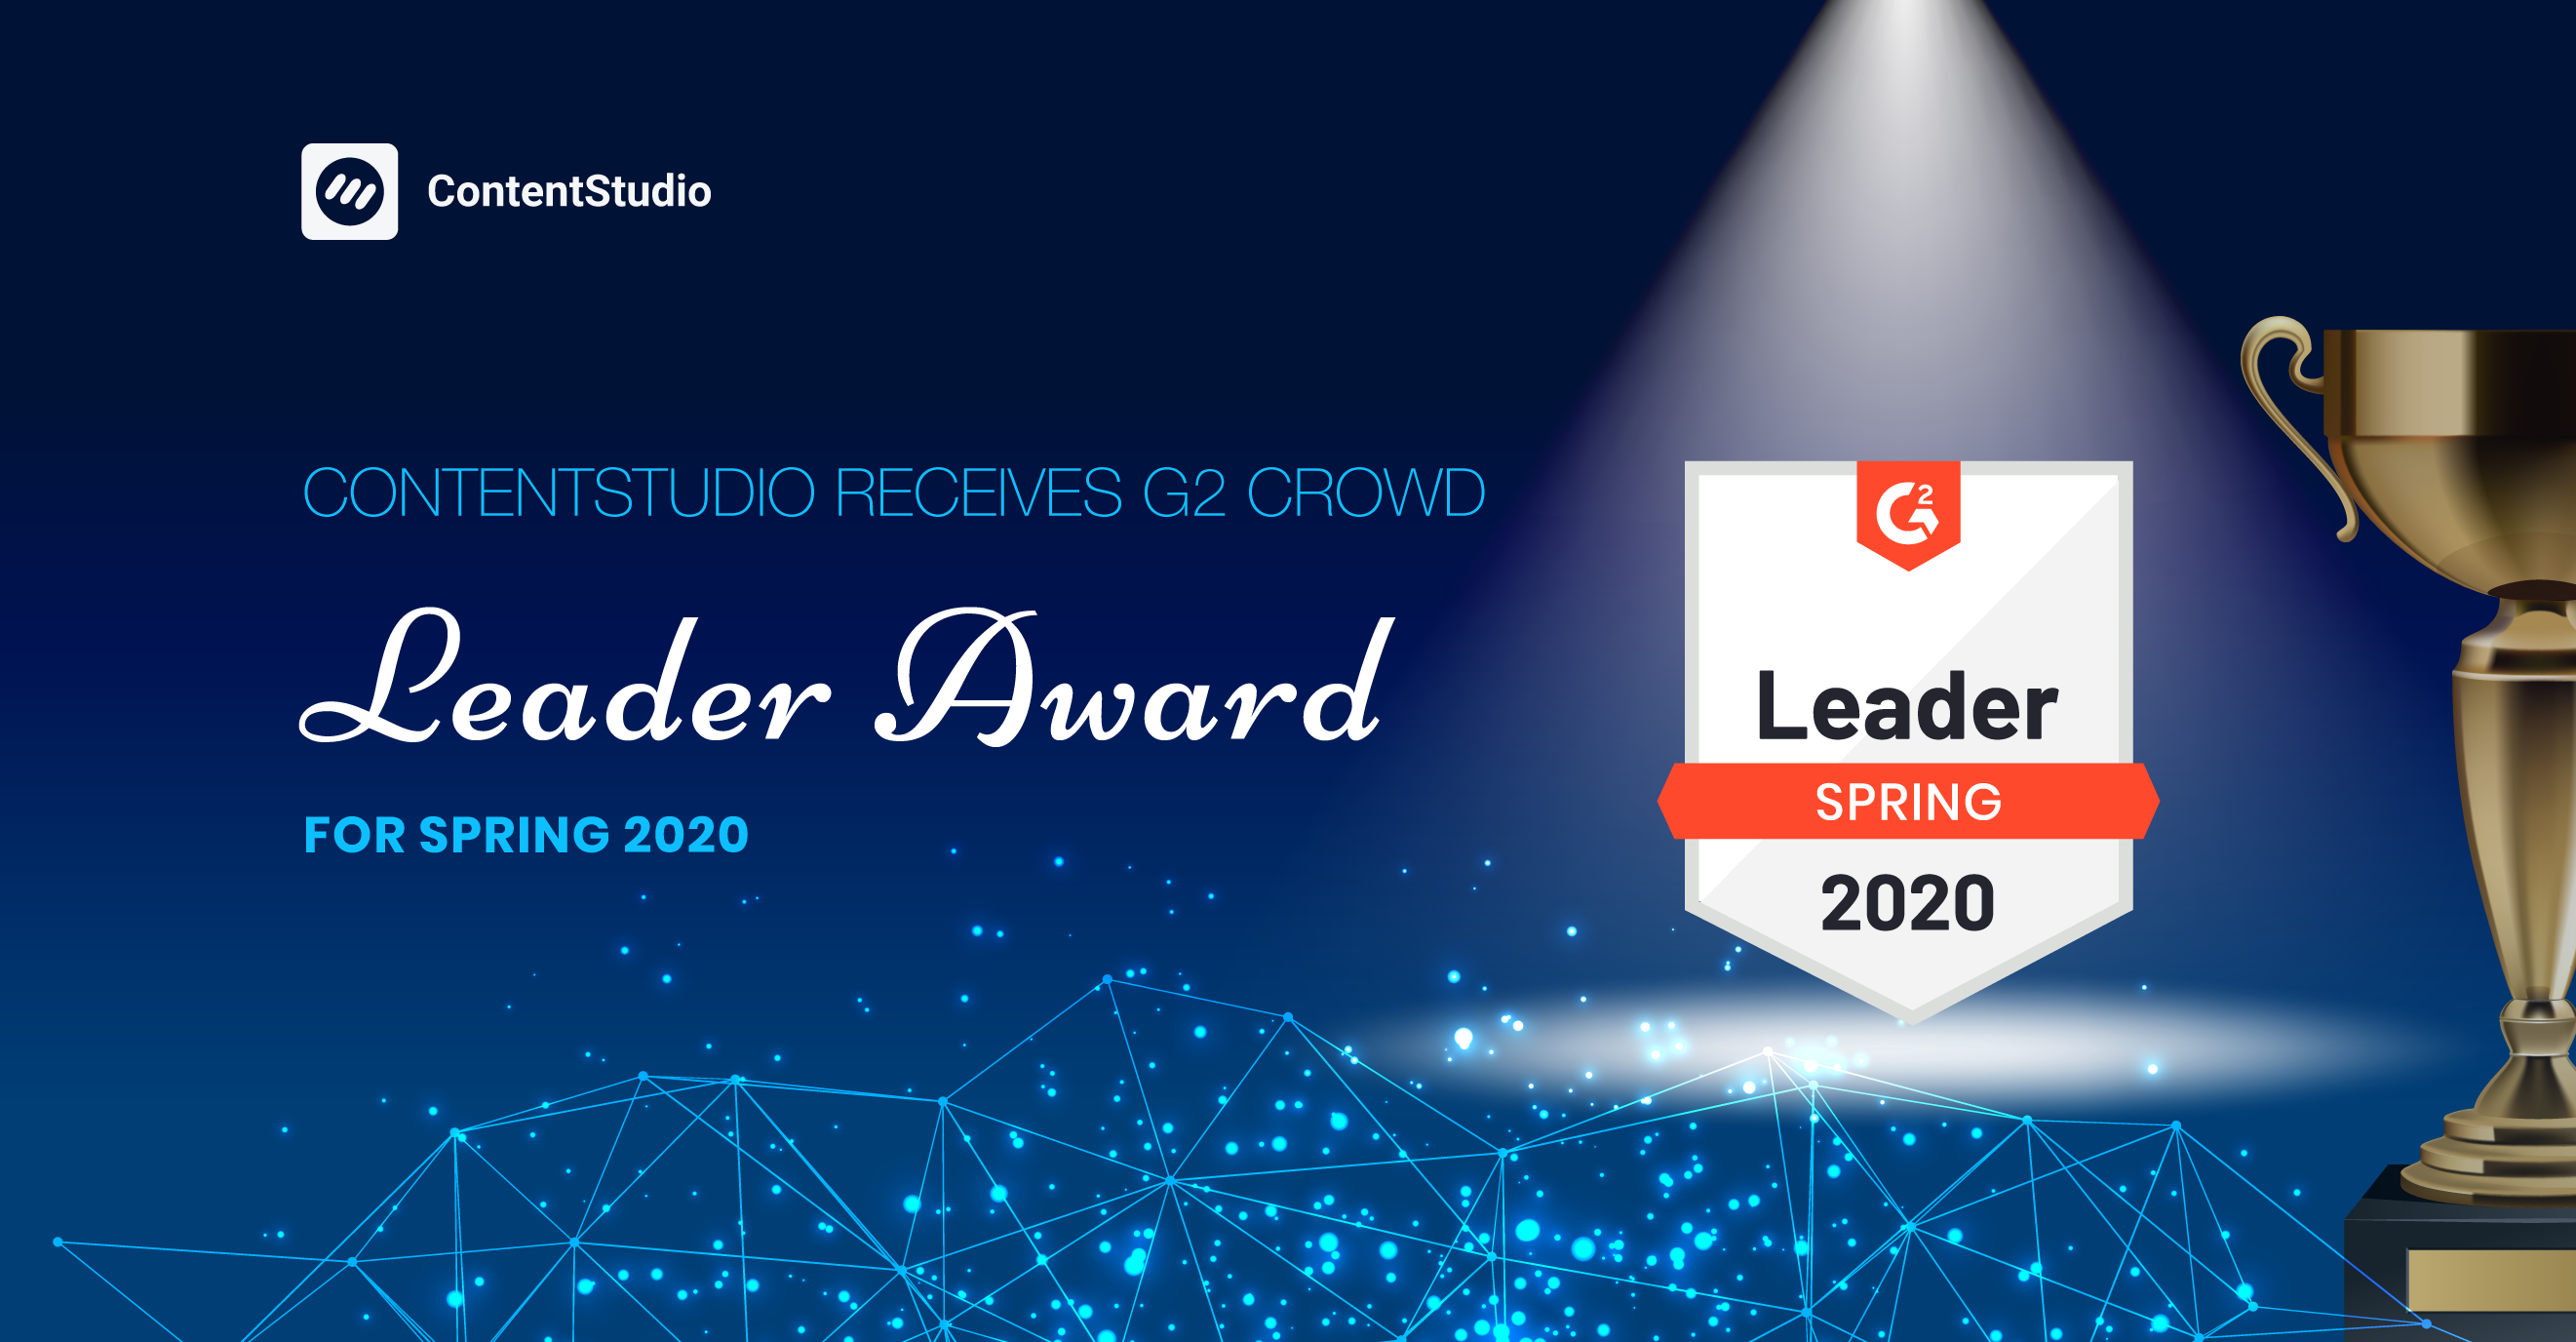 ContentStudio Receives G2 Crowd Leader Award for Spring 2020